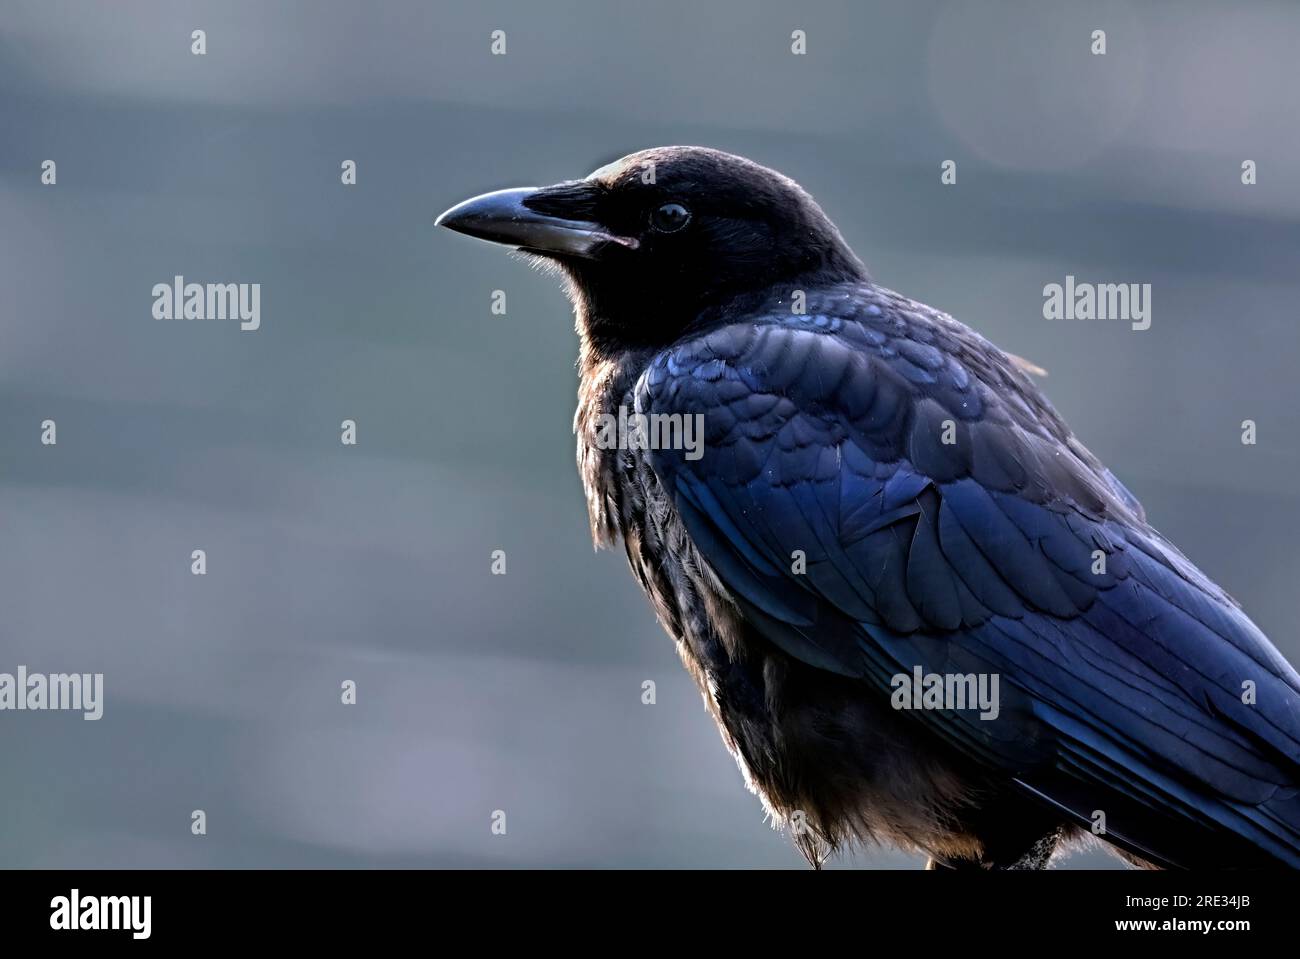 A close up portrait of a young crow 'Corvus brachyrhynchos'; Stock Photo